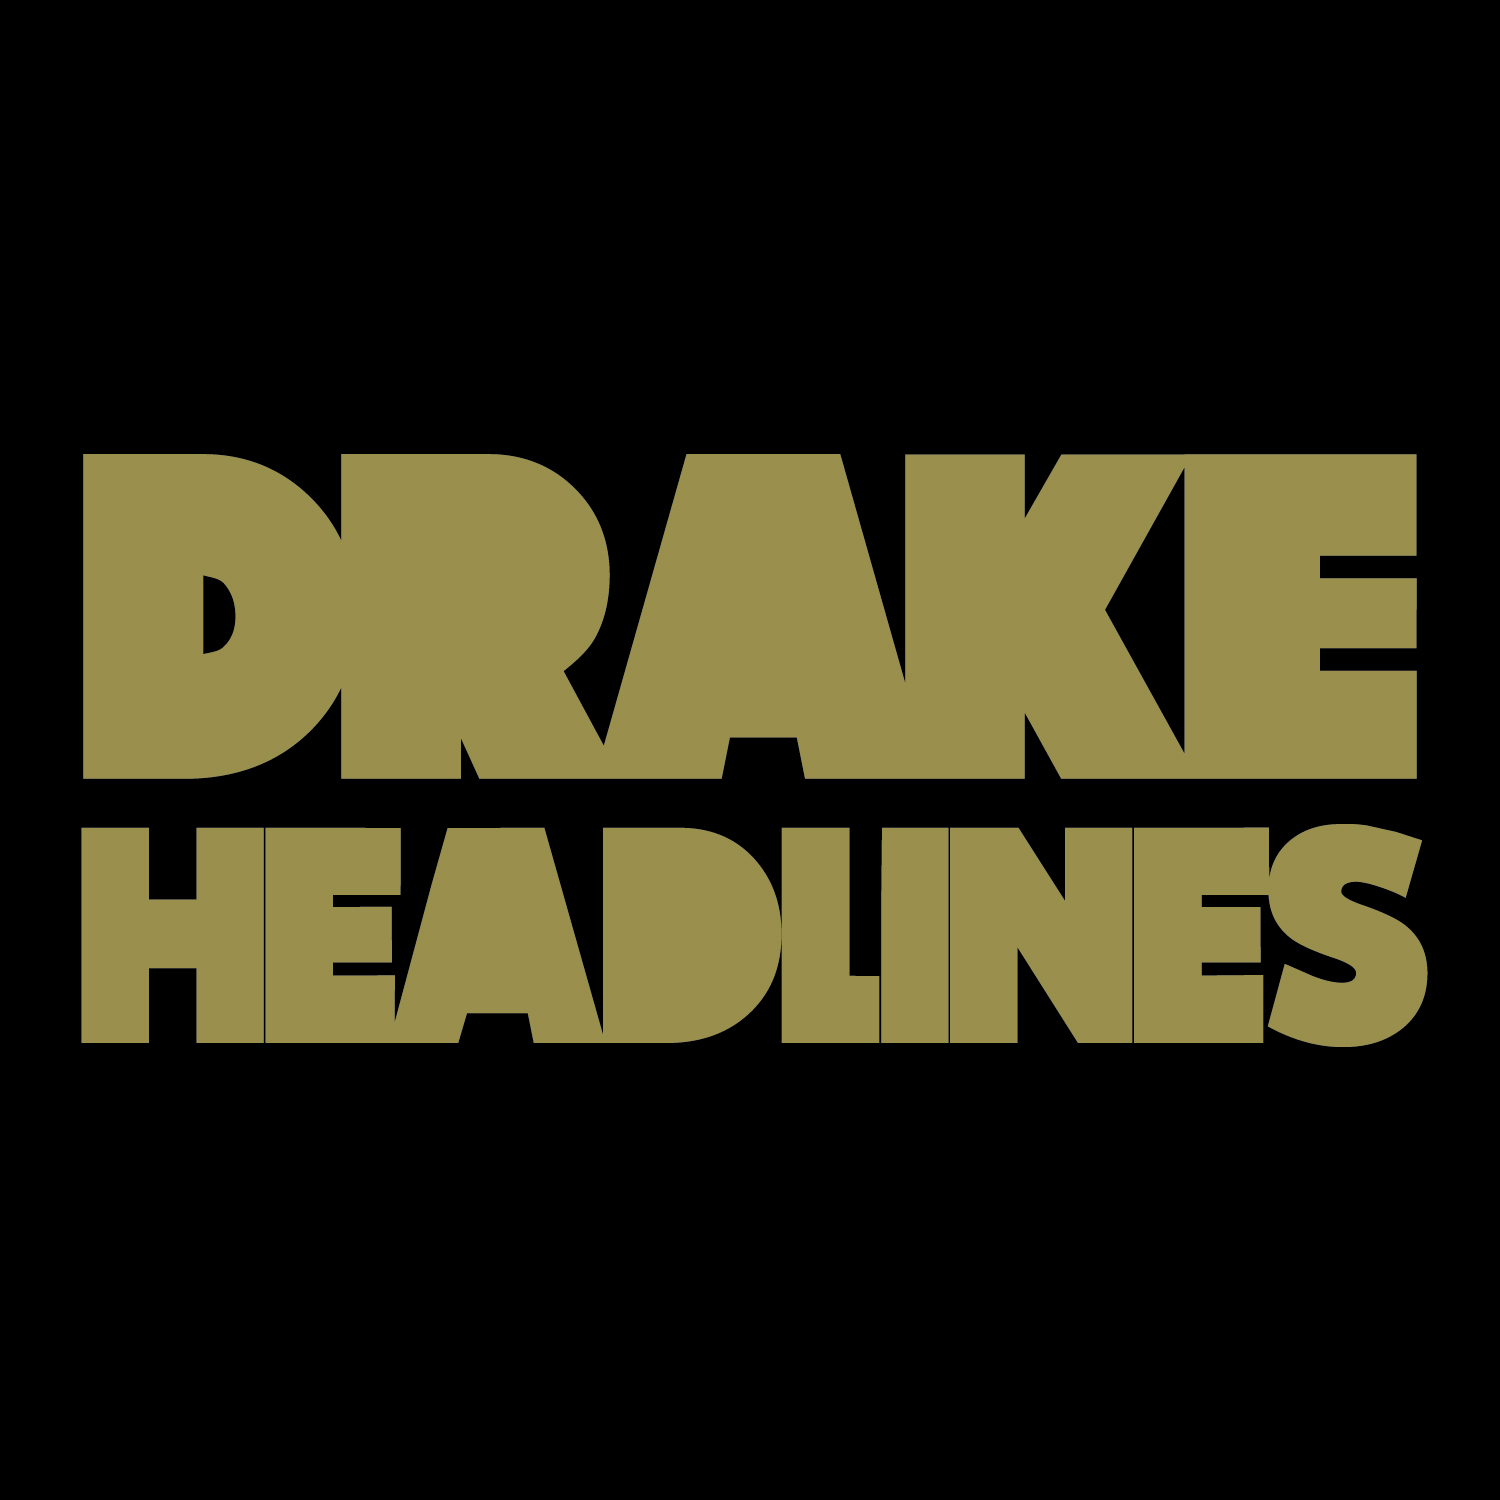 Drake+headlines+album+take+care